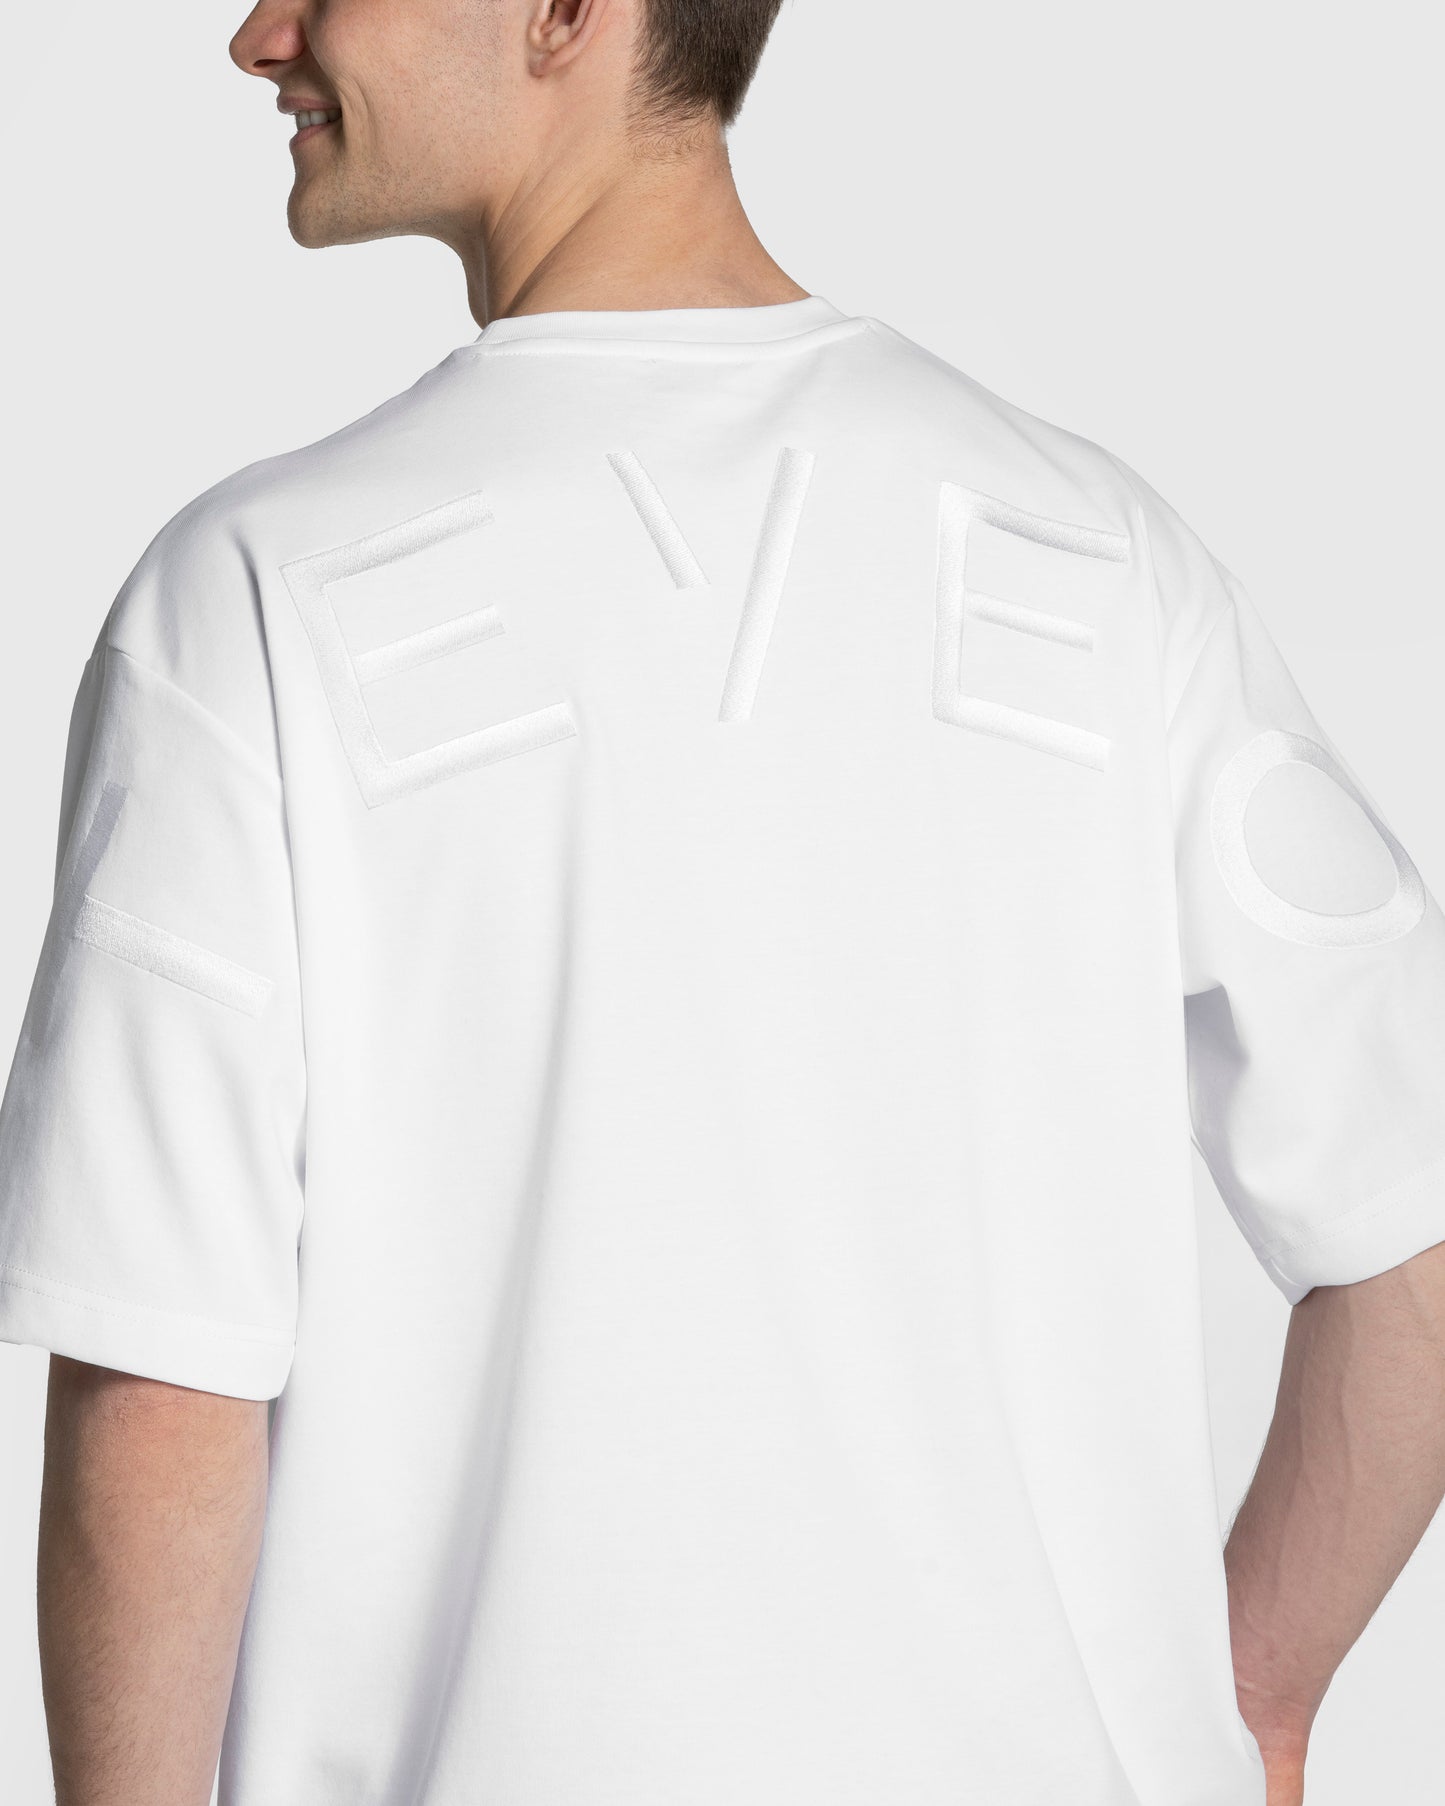 Arrival Signature T-Shirt "Weiß"